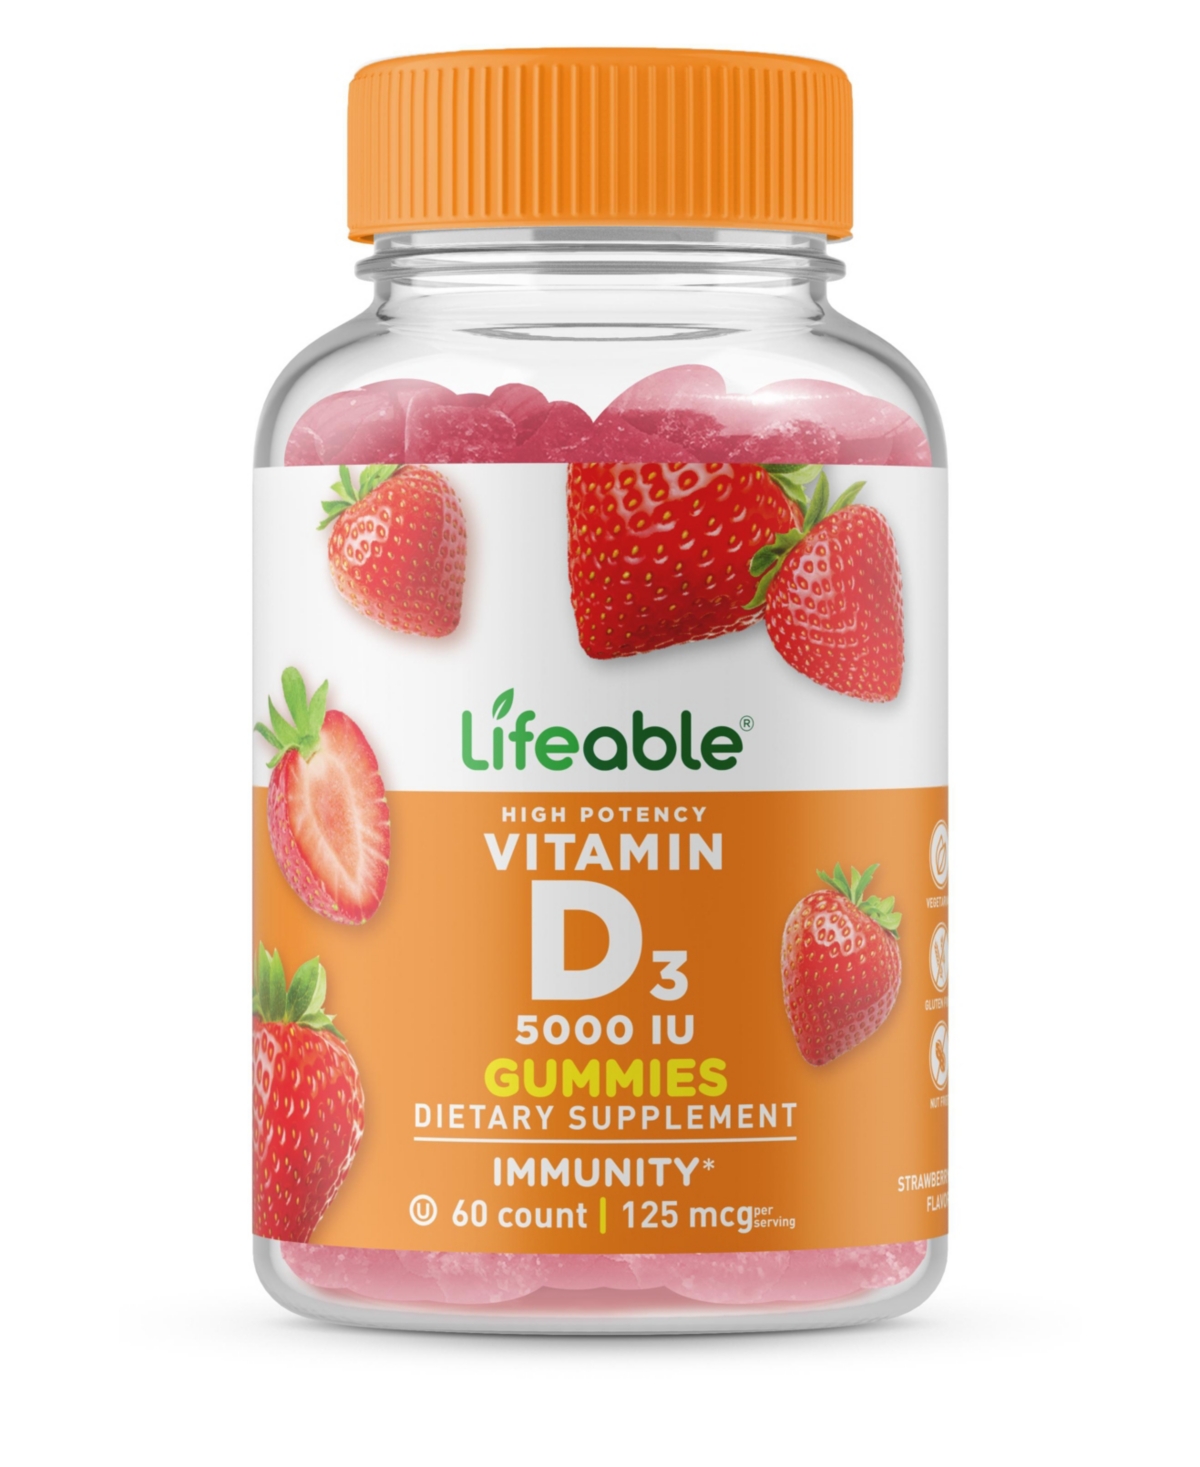 Vitamin D 5,000 Iu Gummies - Bone Health And Immunity - Great Tasting Natural Flavor, Dietary Supplement Vitamins - 60 Gummies - Open Miscell